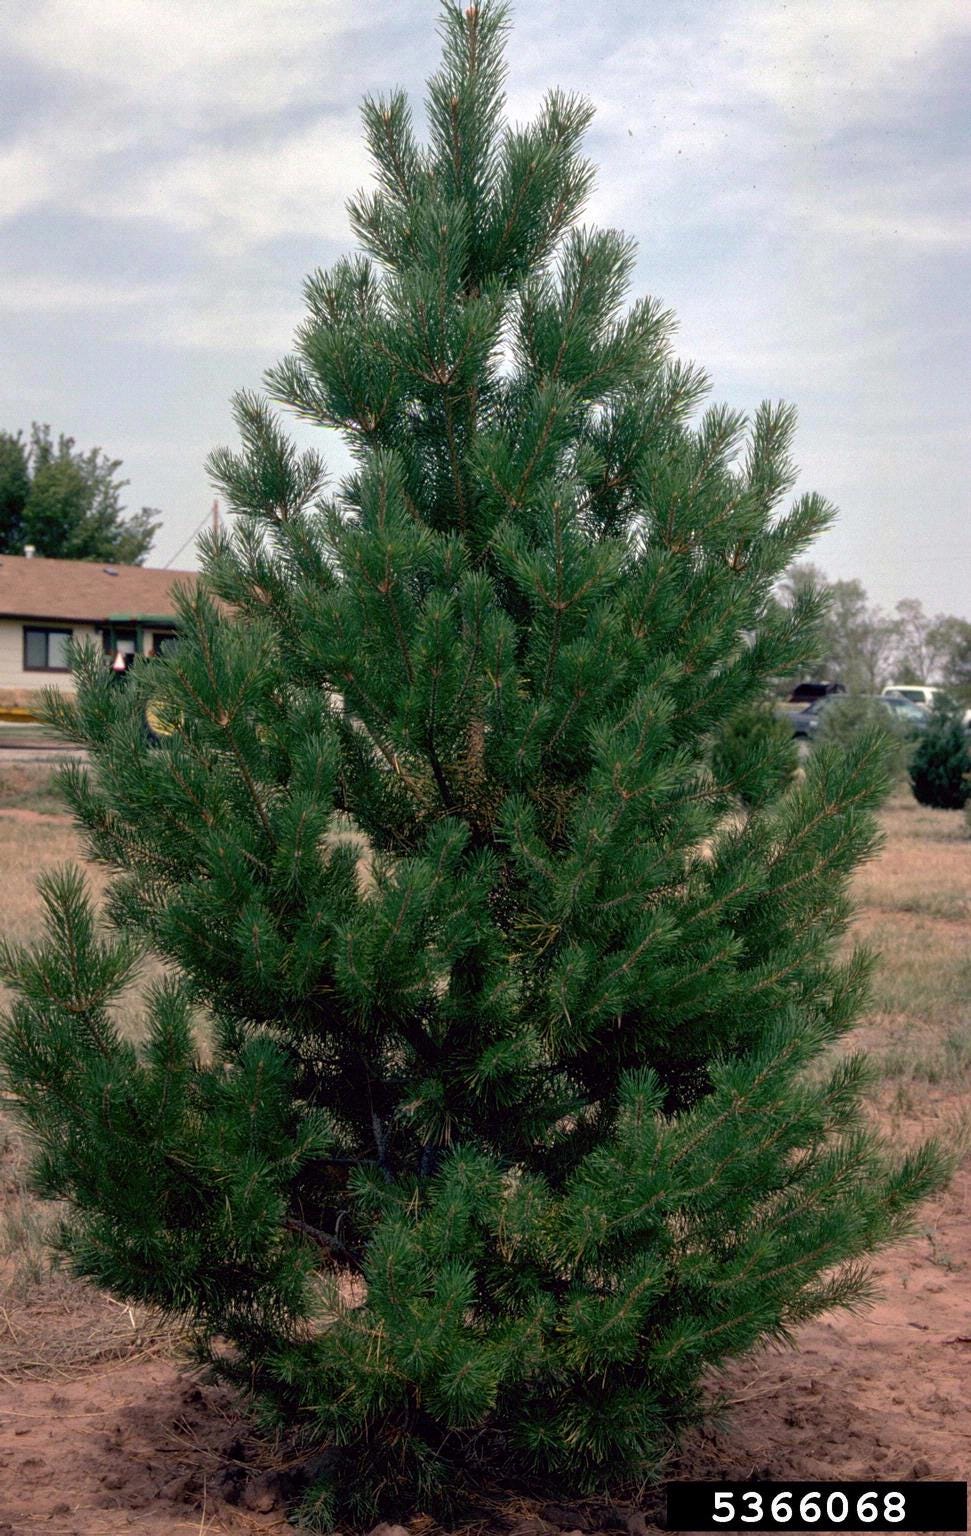 An unadorned Scotts pine tree